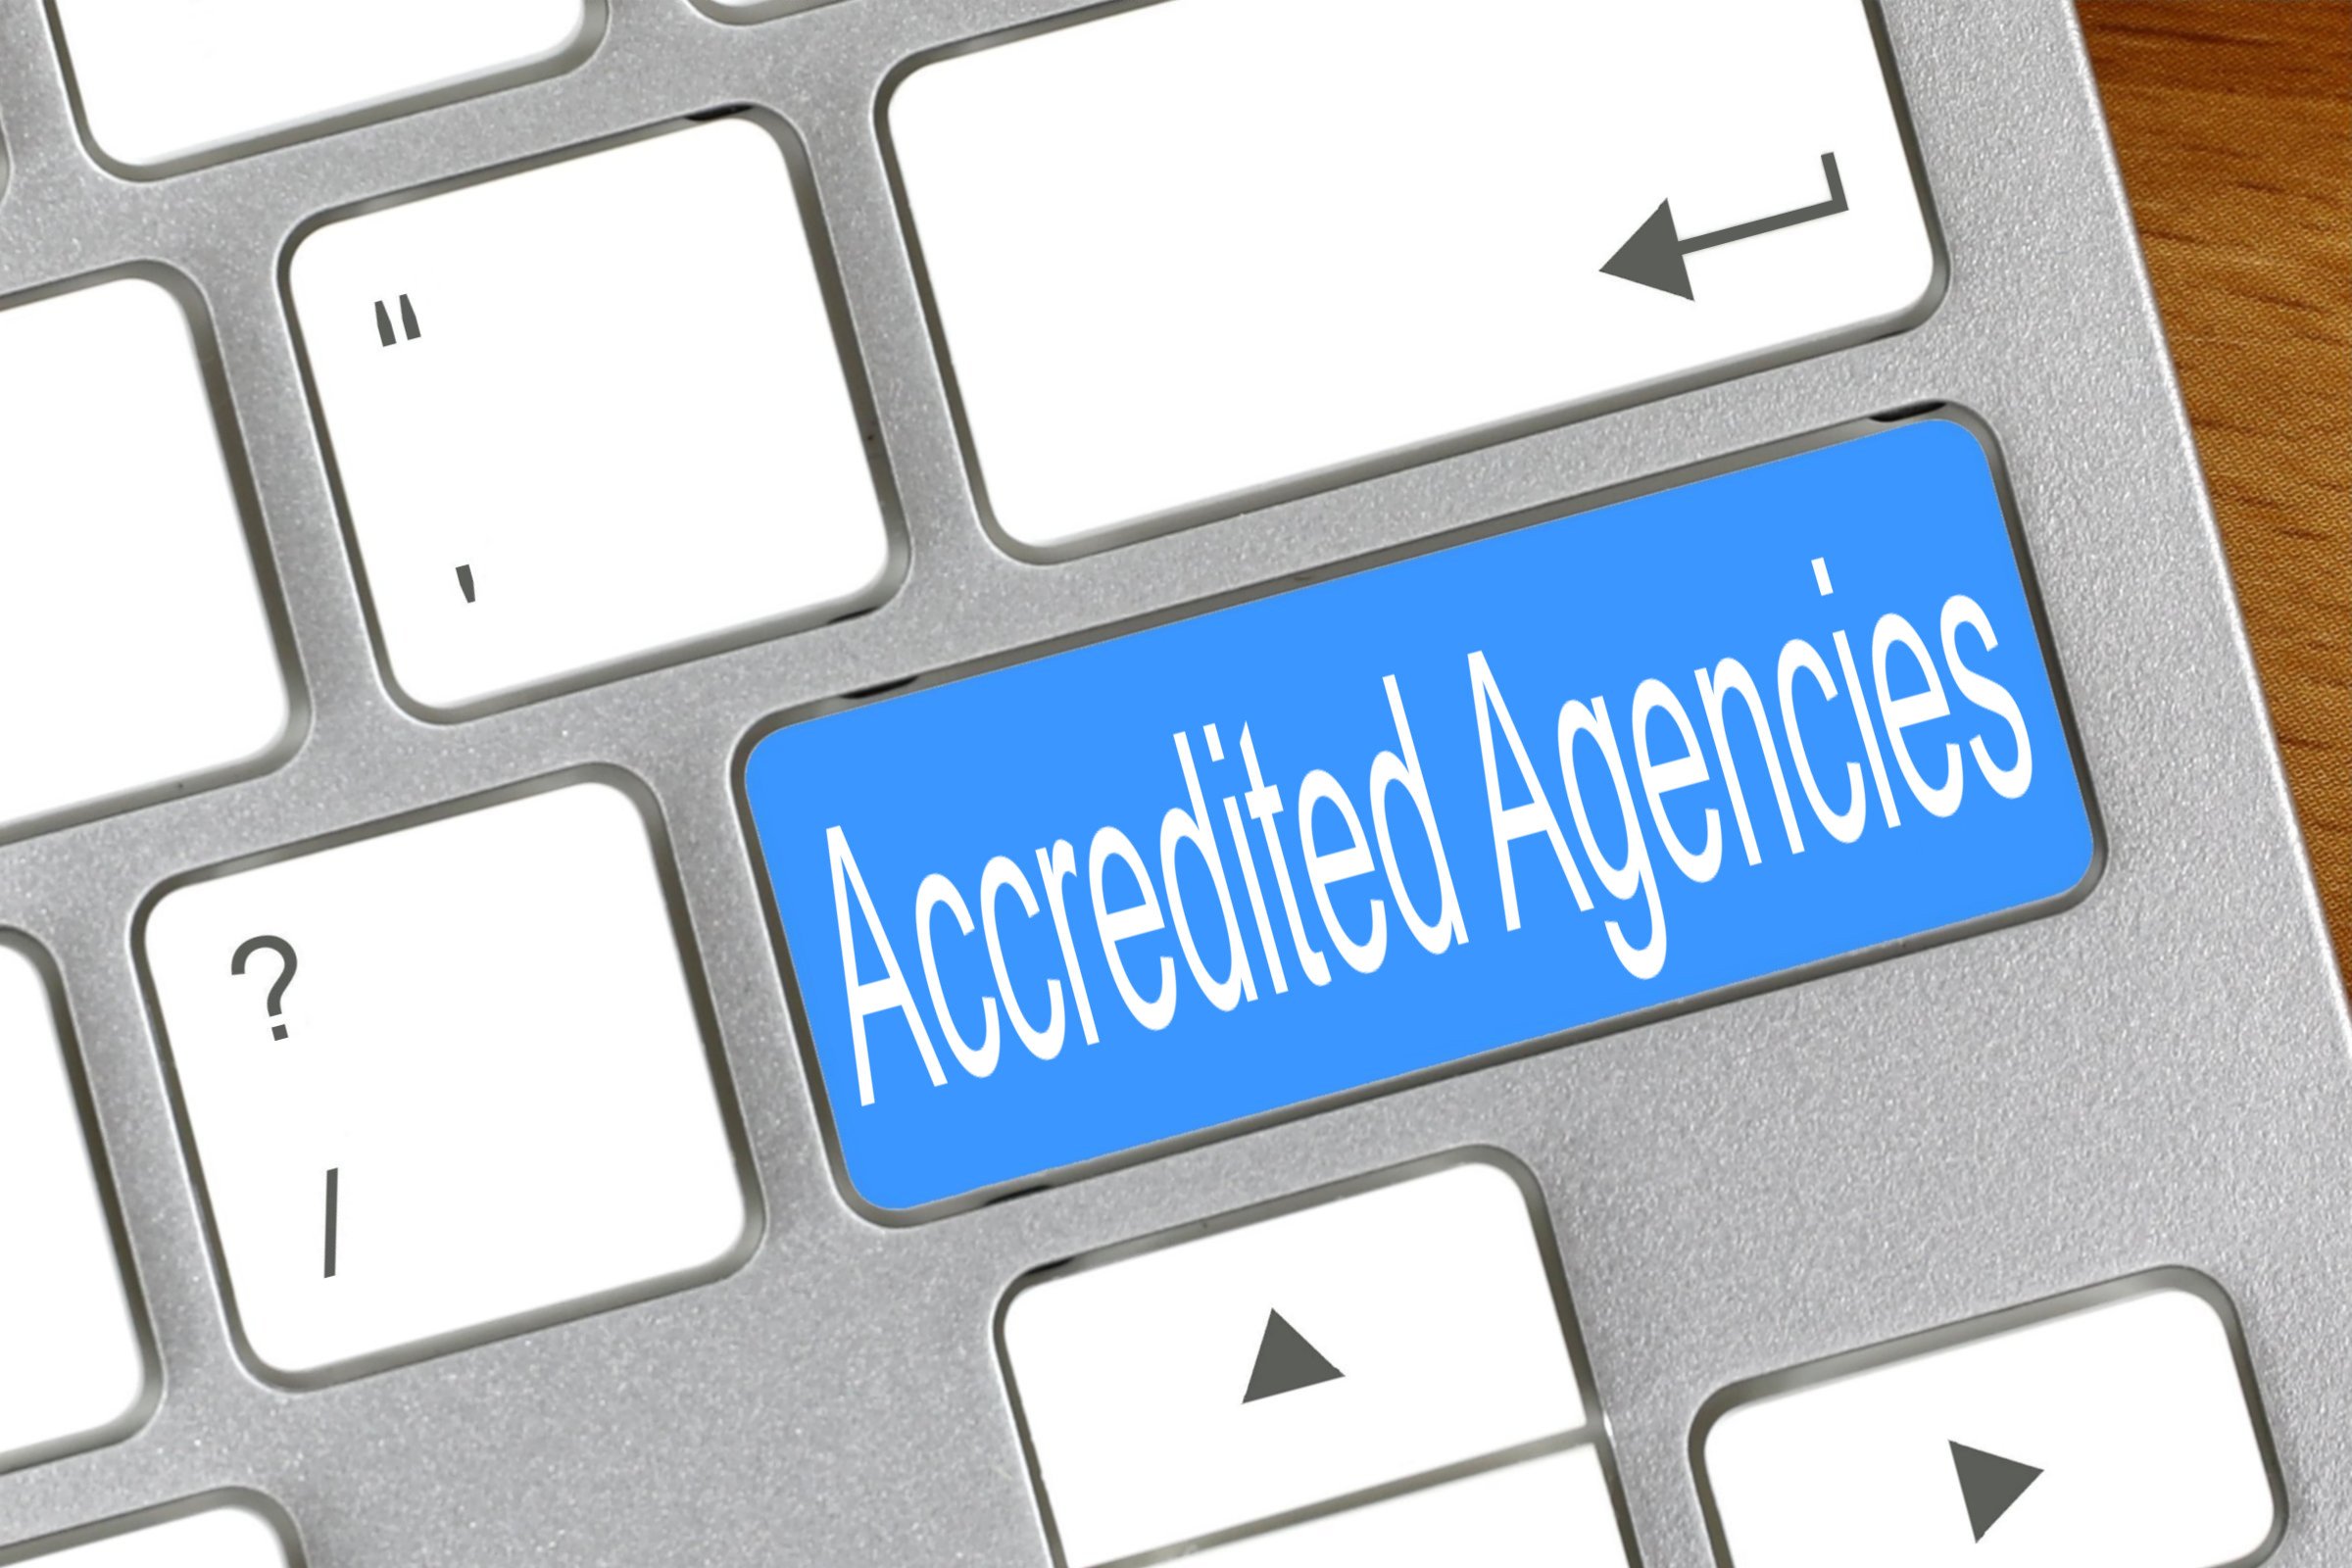 accredited agencies